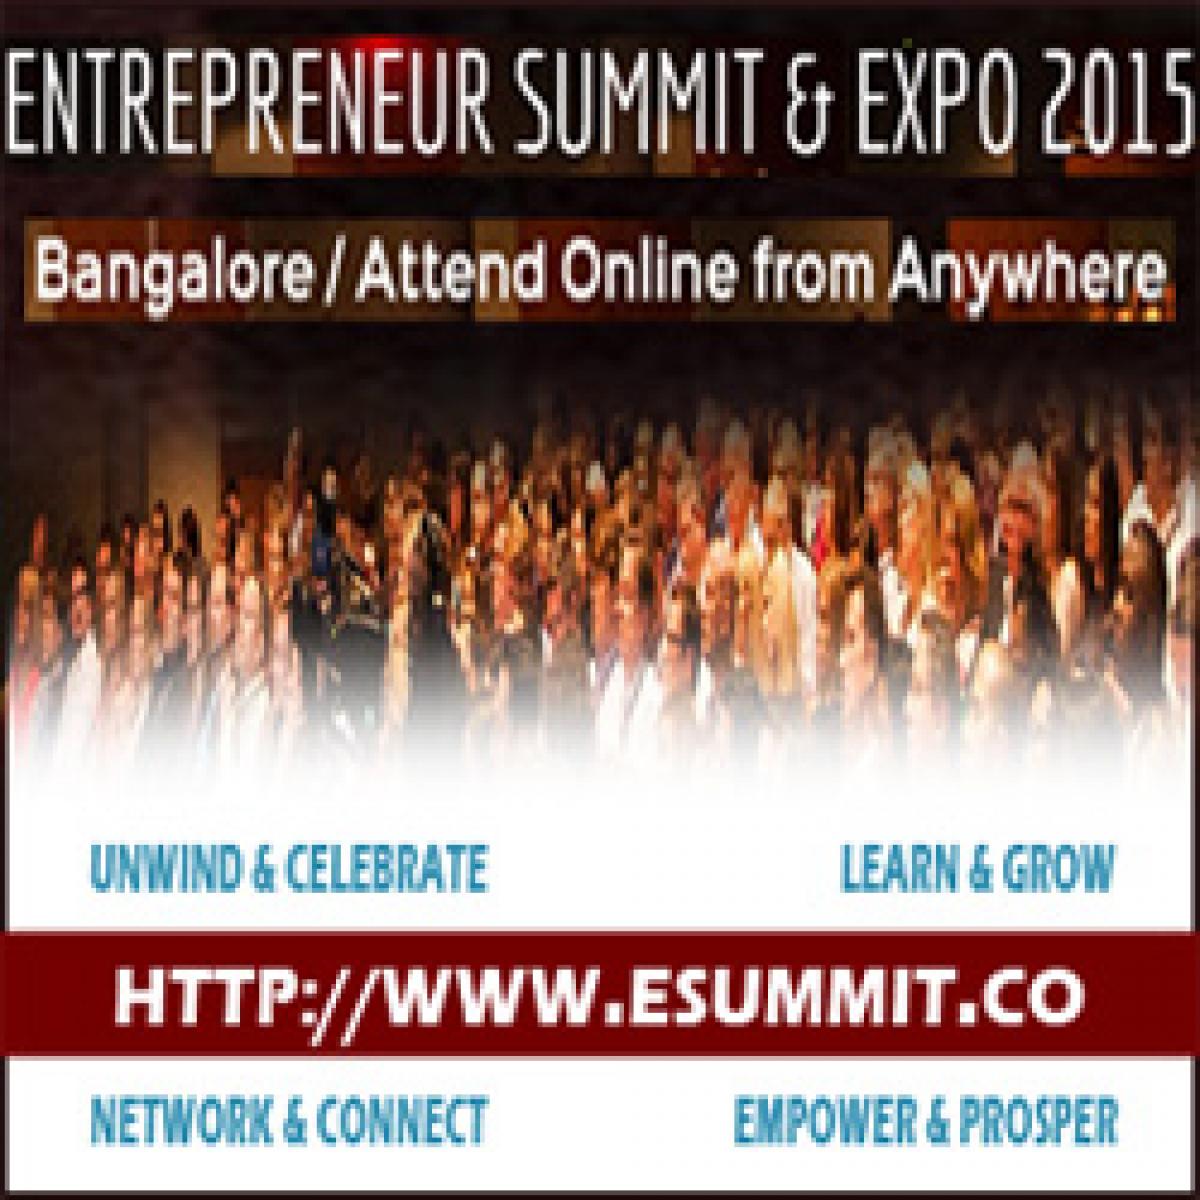 India to Witness a Mega Entrepreneurship Event on December 6